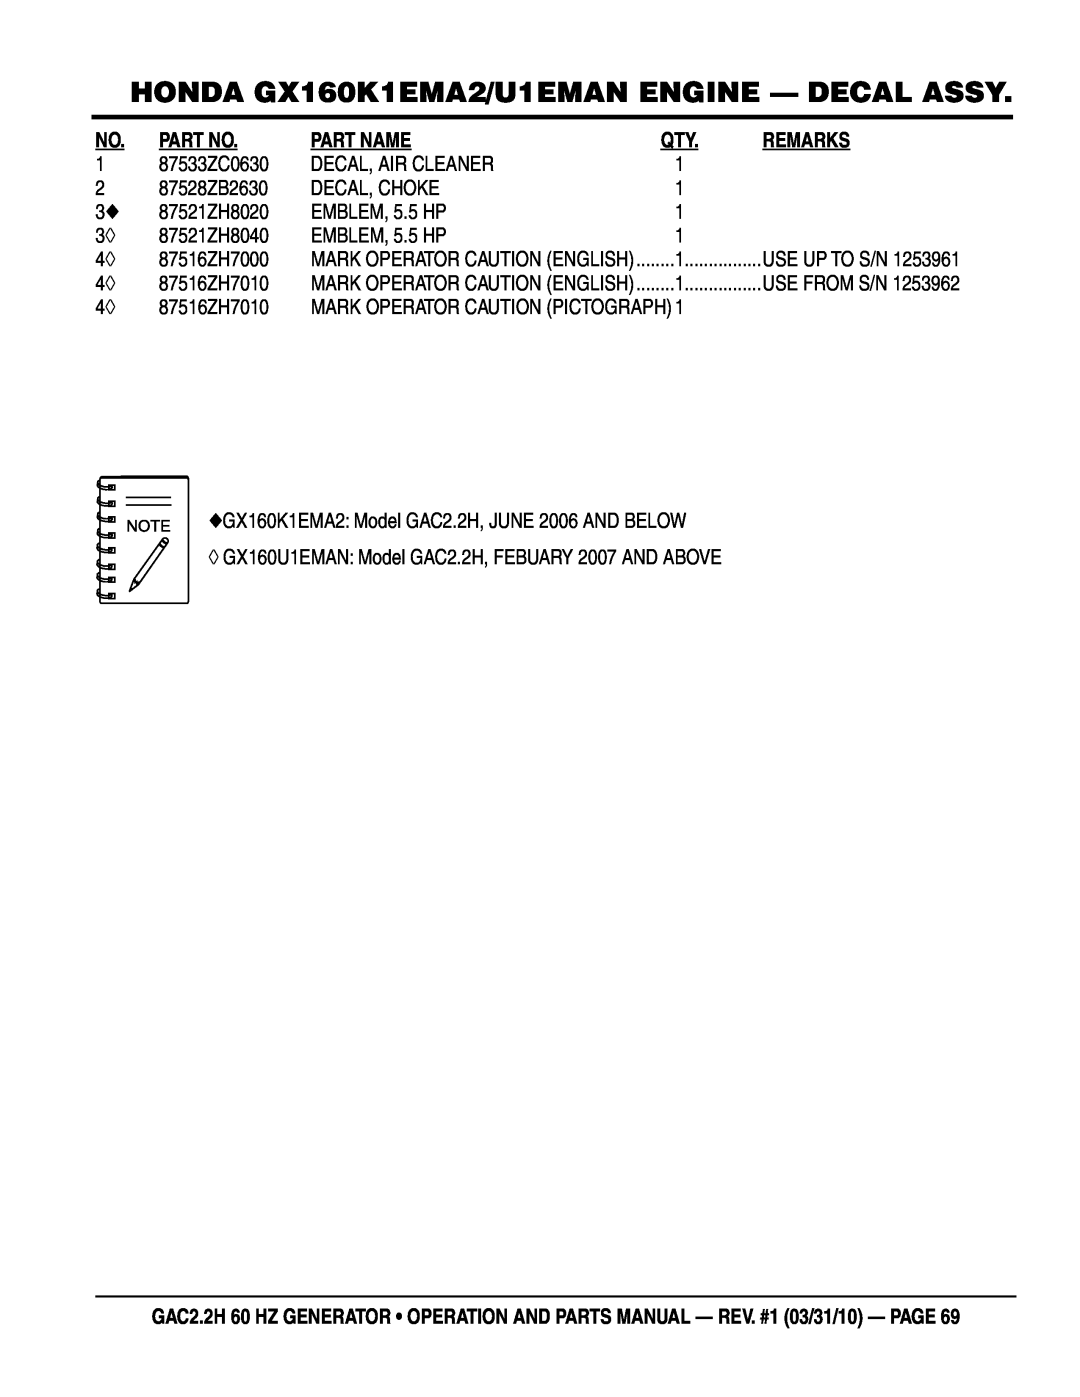 Multiquip GAC2.2H manual HONDA GX160K1EMA2/U1EMAN engine - DECAL assy, Part Name, Remarks, 87533ZC0630 